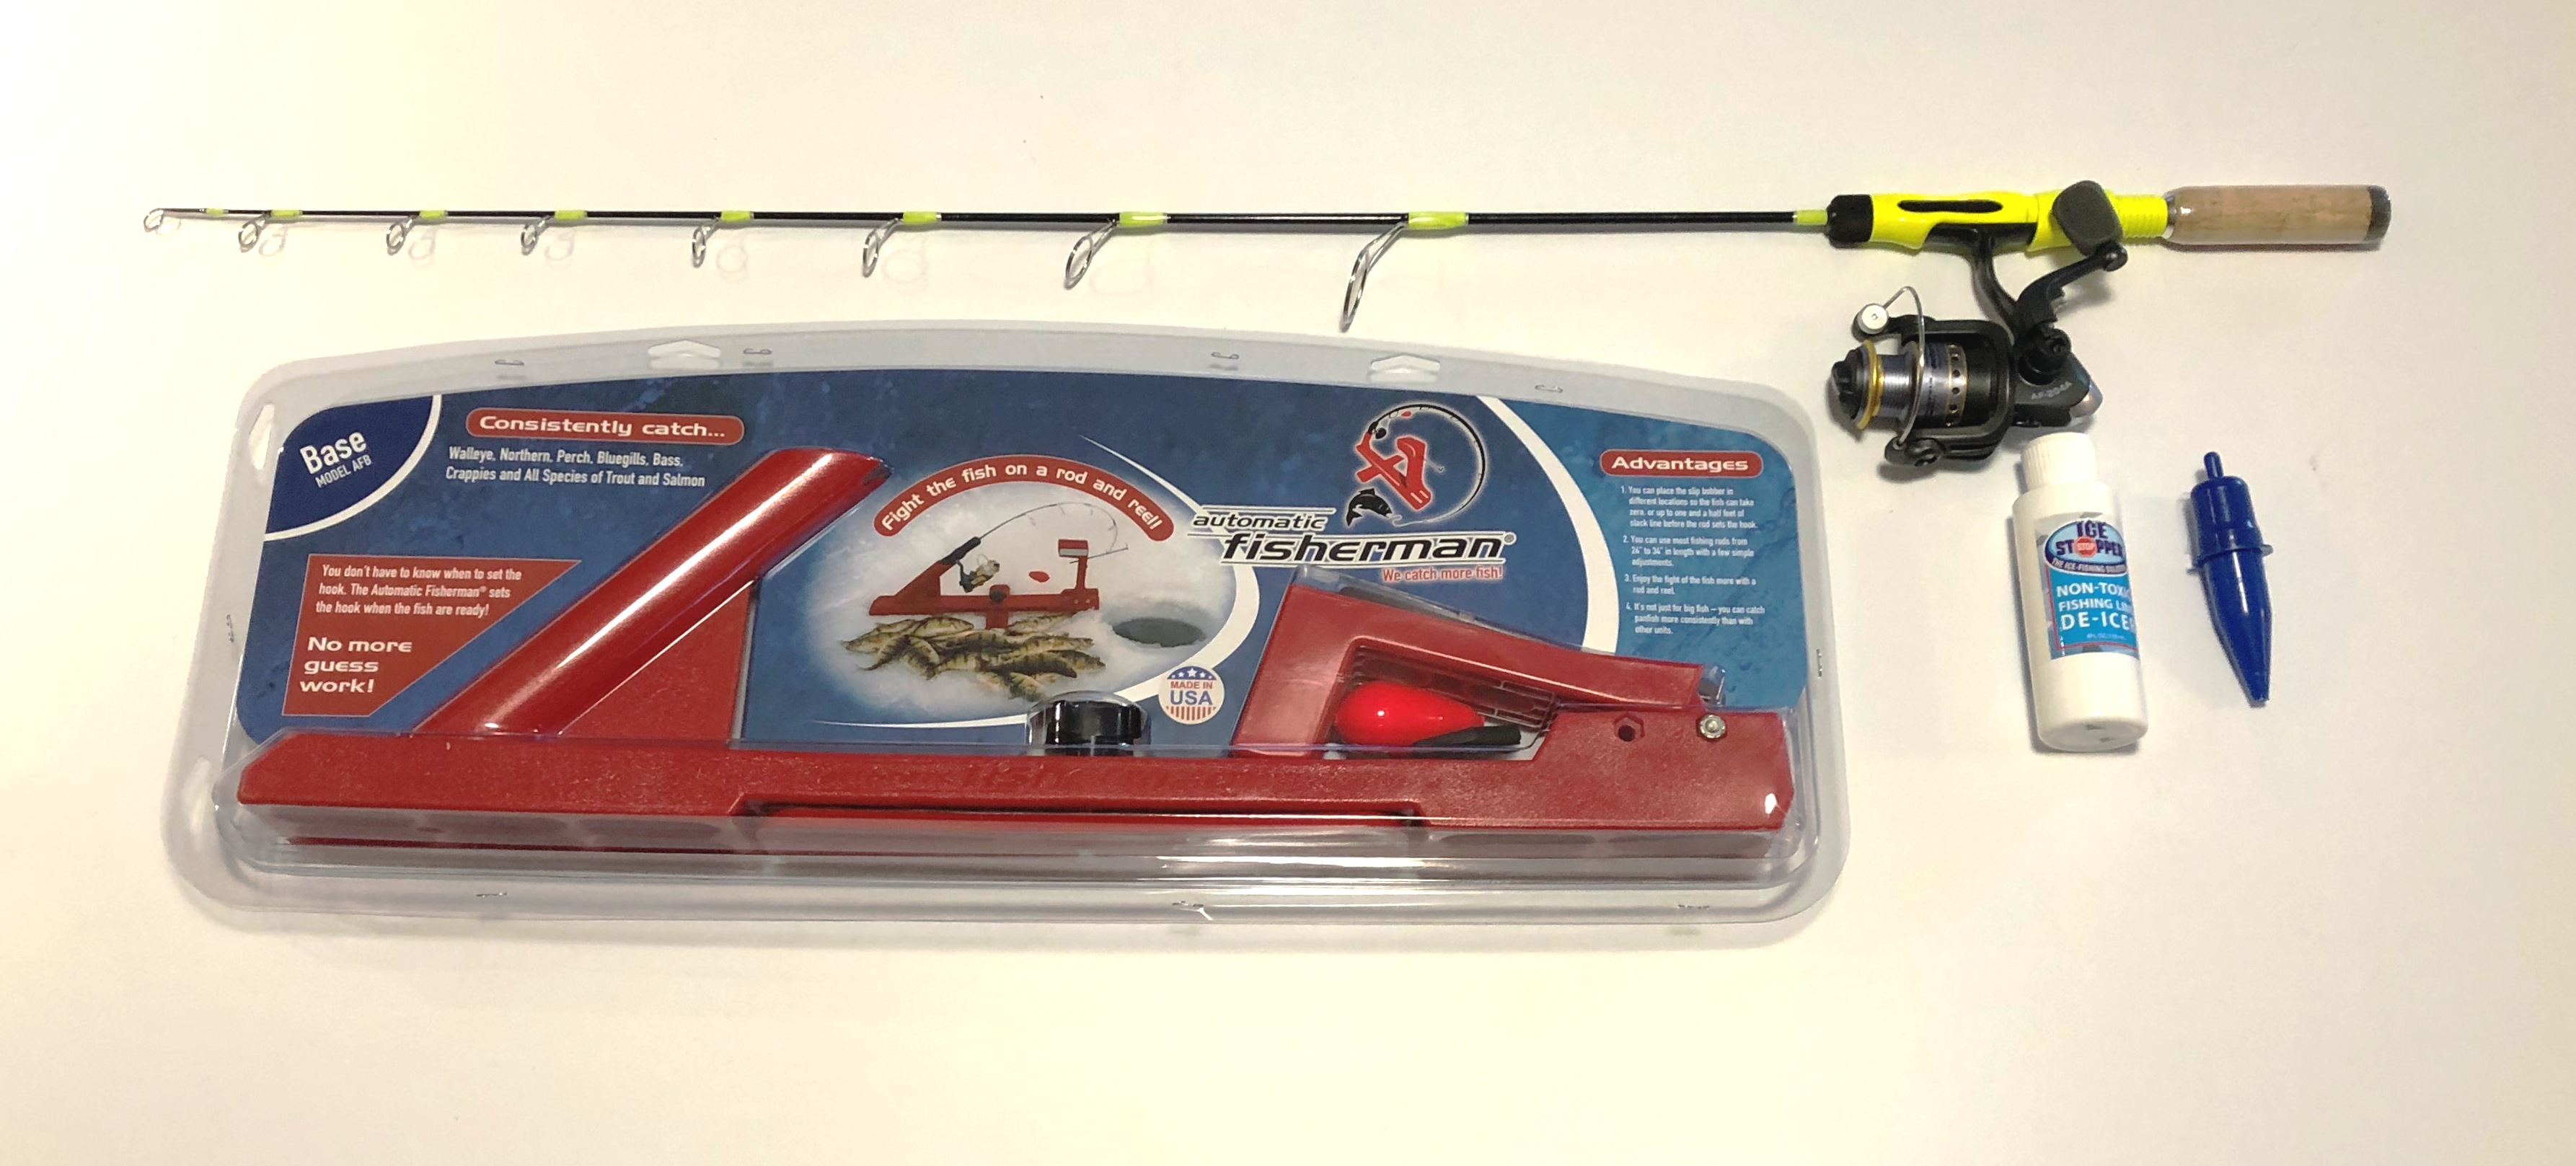 AUTOMATIC FISHERMAN rod and reel kits - Automatic Fisherman, Store, Purchase Automatic Fisherman